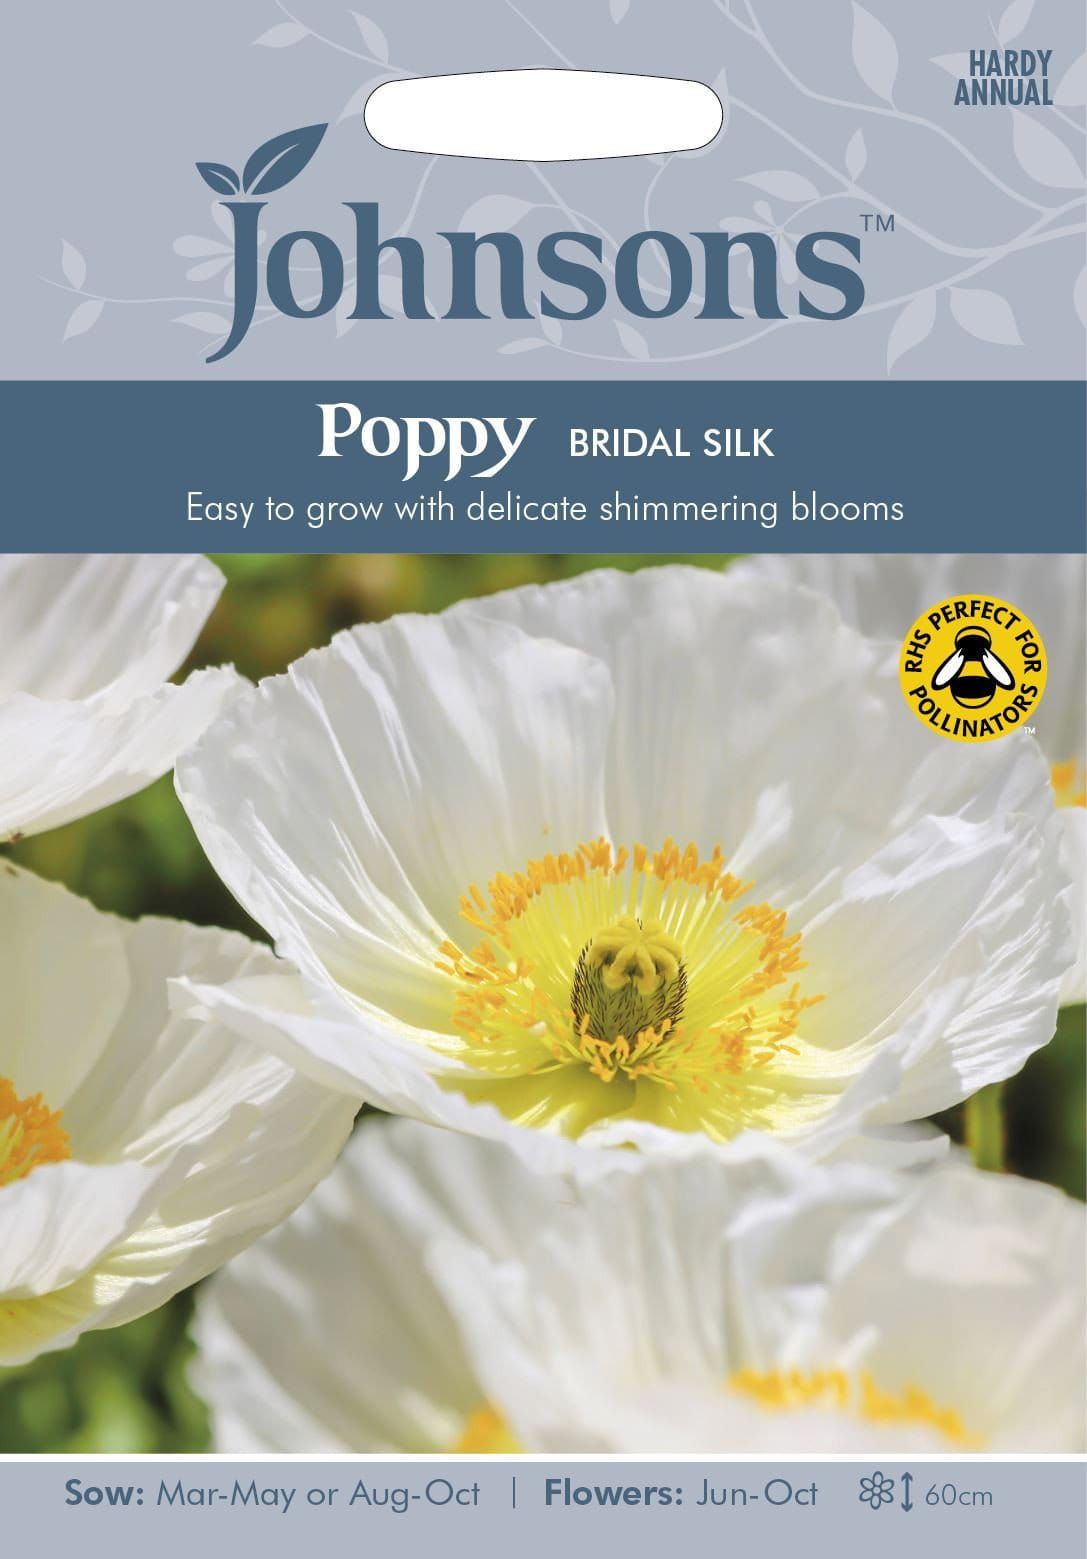 Johnsons Poppy Bridal Silk 500 Seeds